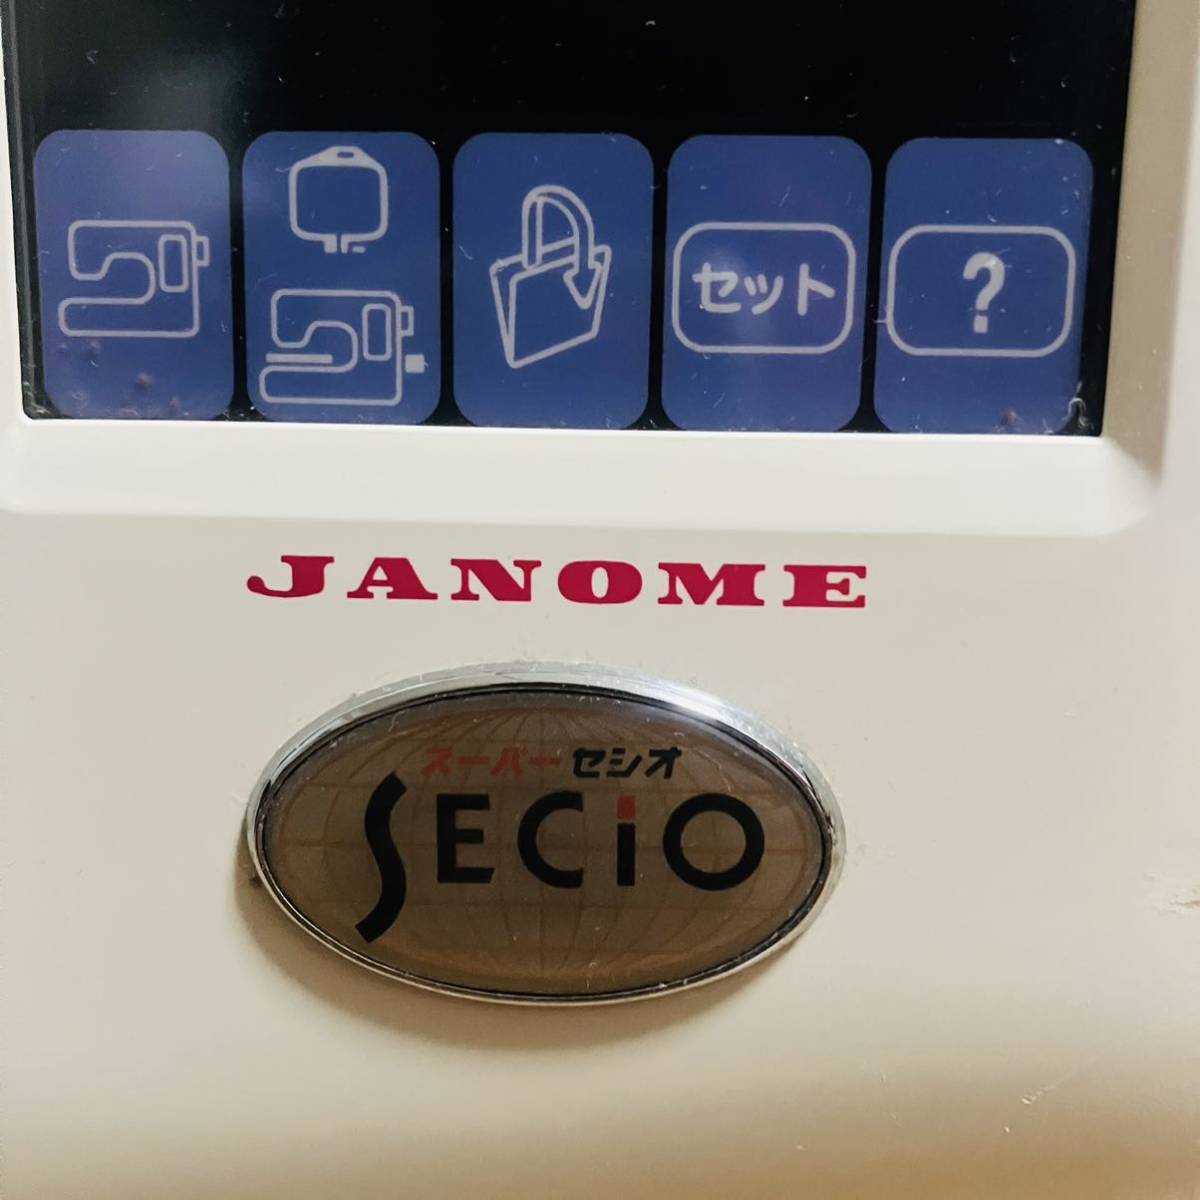 JANOME ジャノメ コンピュータミシン スーパーセシオ 850型 secio 日本製 ハンドクラフト 手工芸 通電ok 説明書付き_画像8